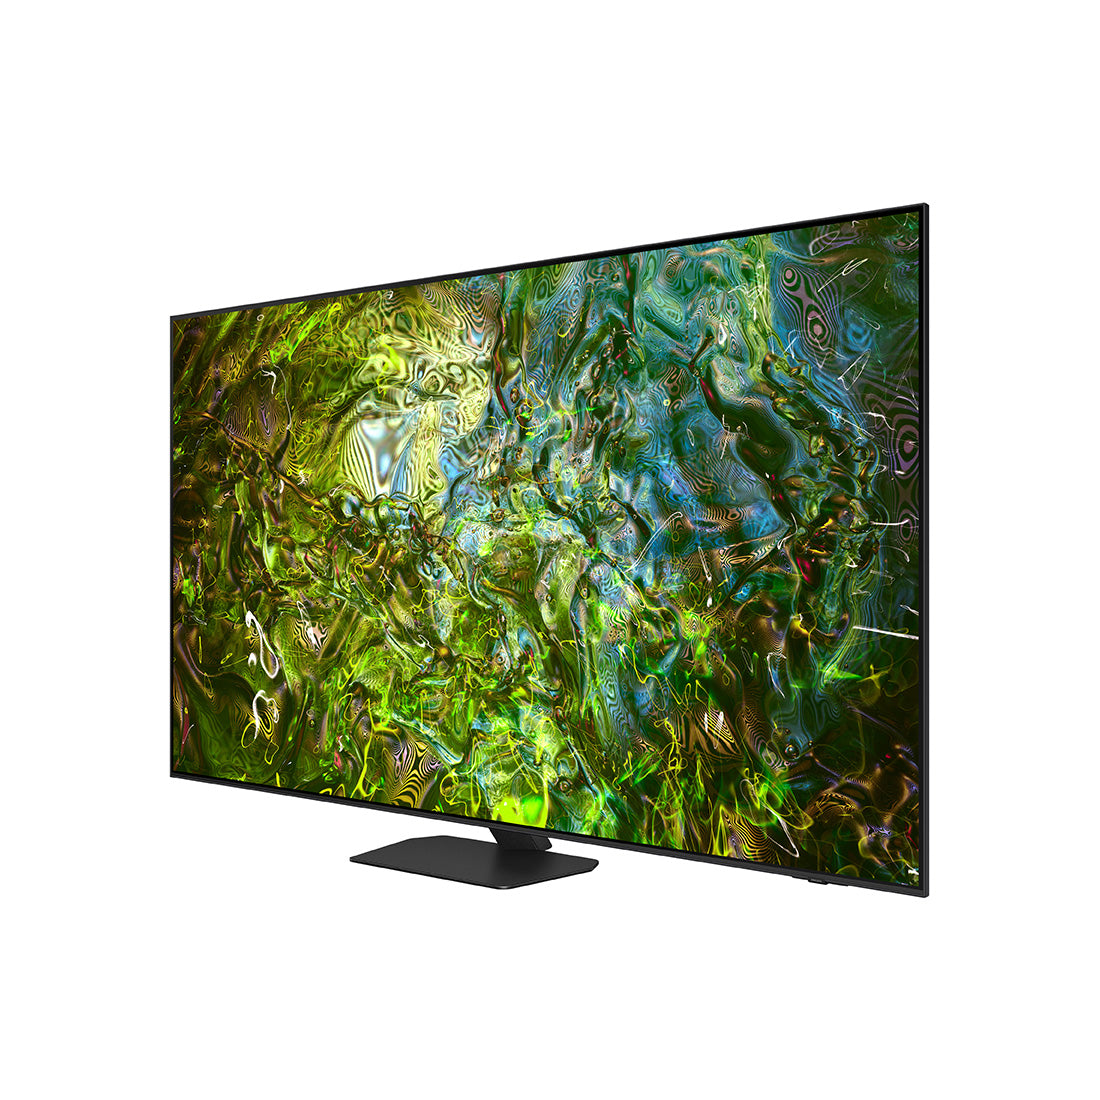 Samsung QN85QN90DAFXZC Neo QLED 4K Smart TV | HW-Q990D/ZC 11.1.4 Channel Soundbar Bundle